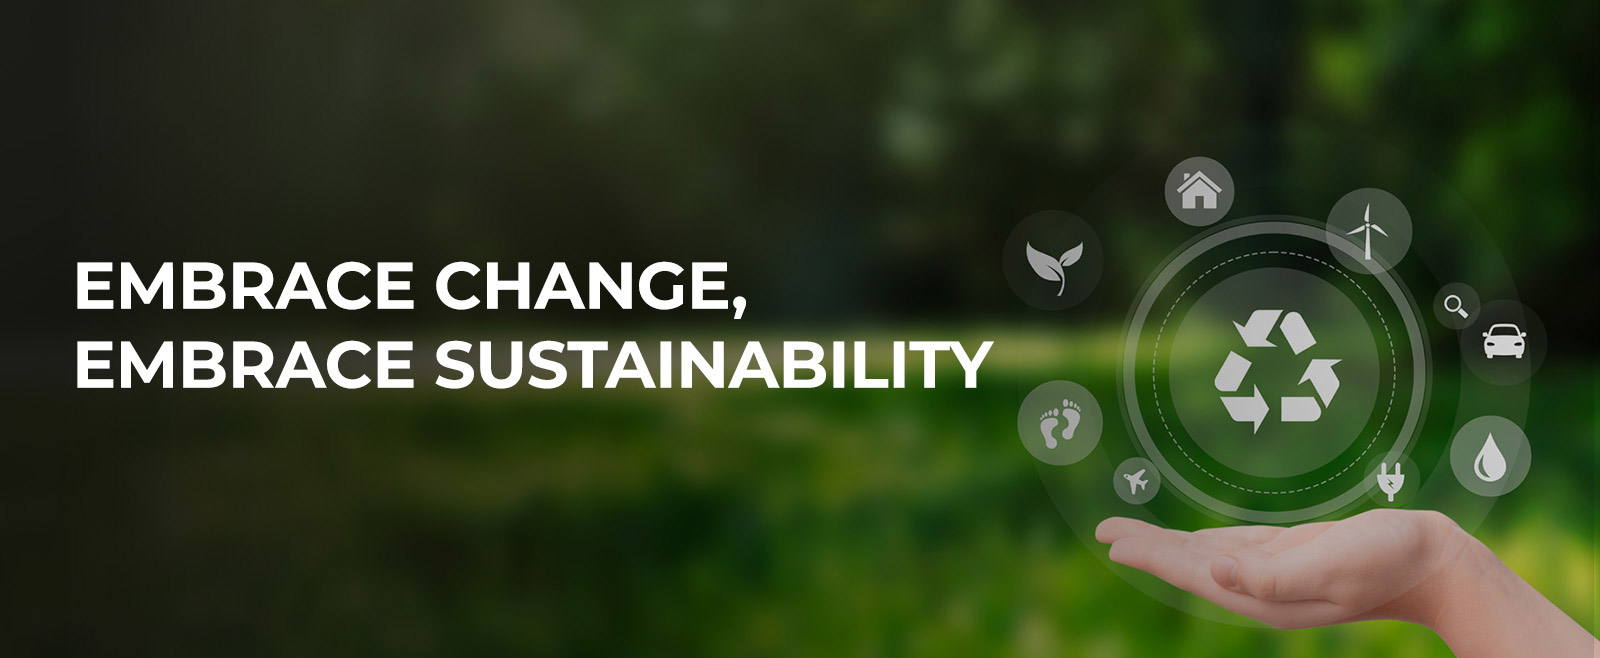 US_sustainability_banner.jpg